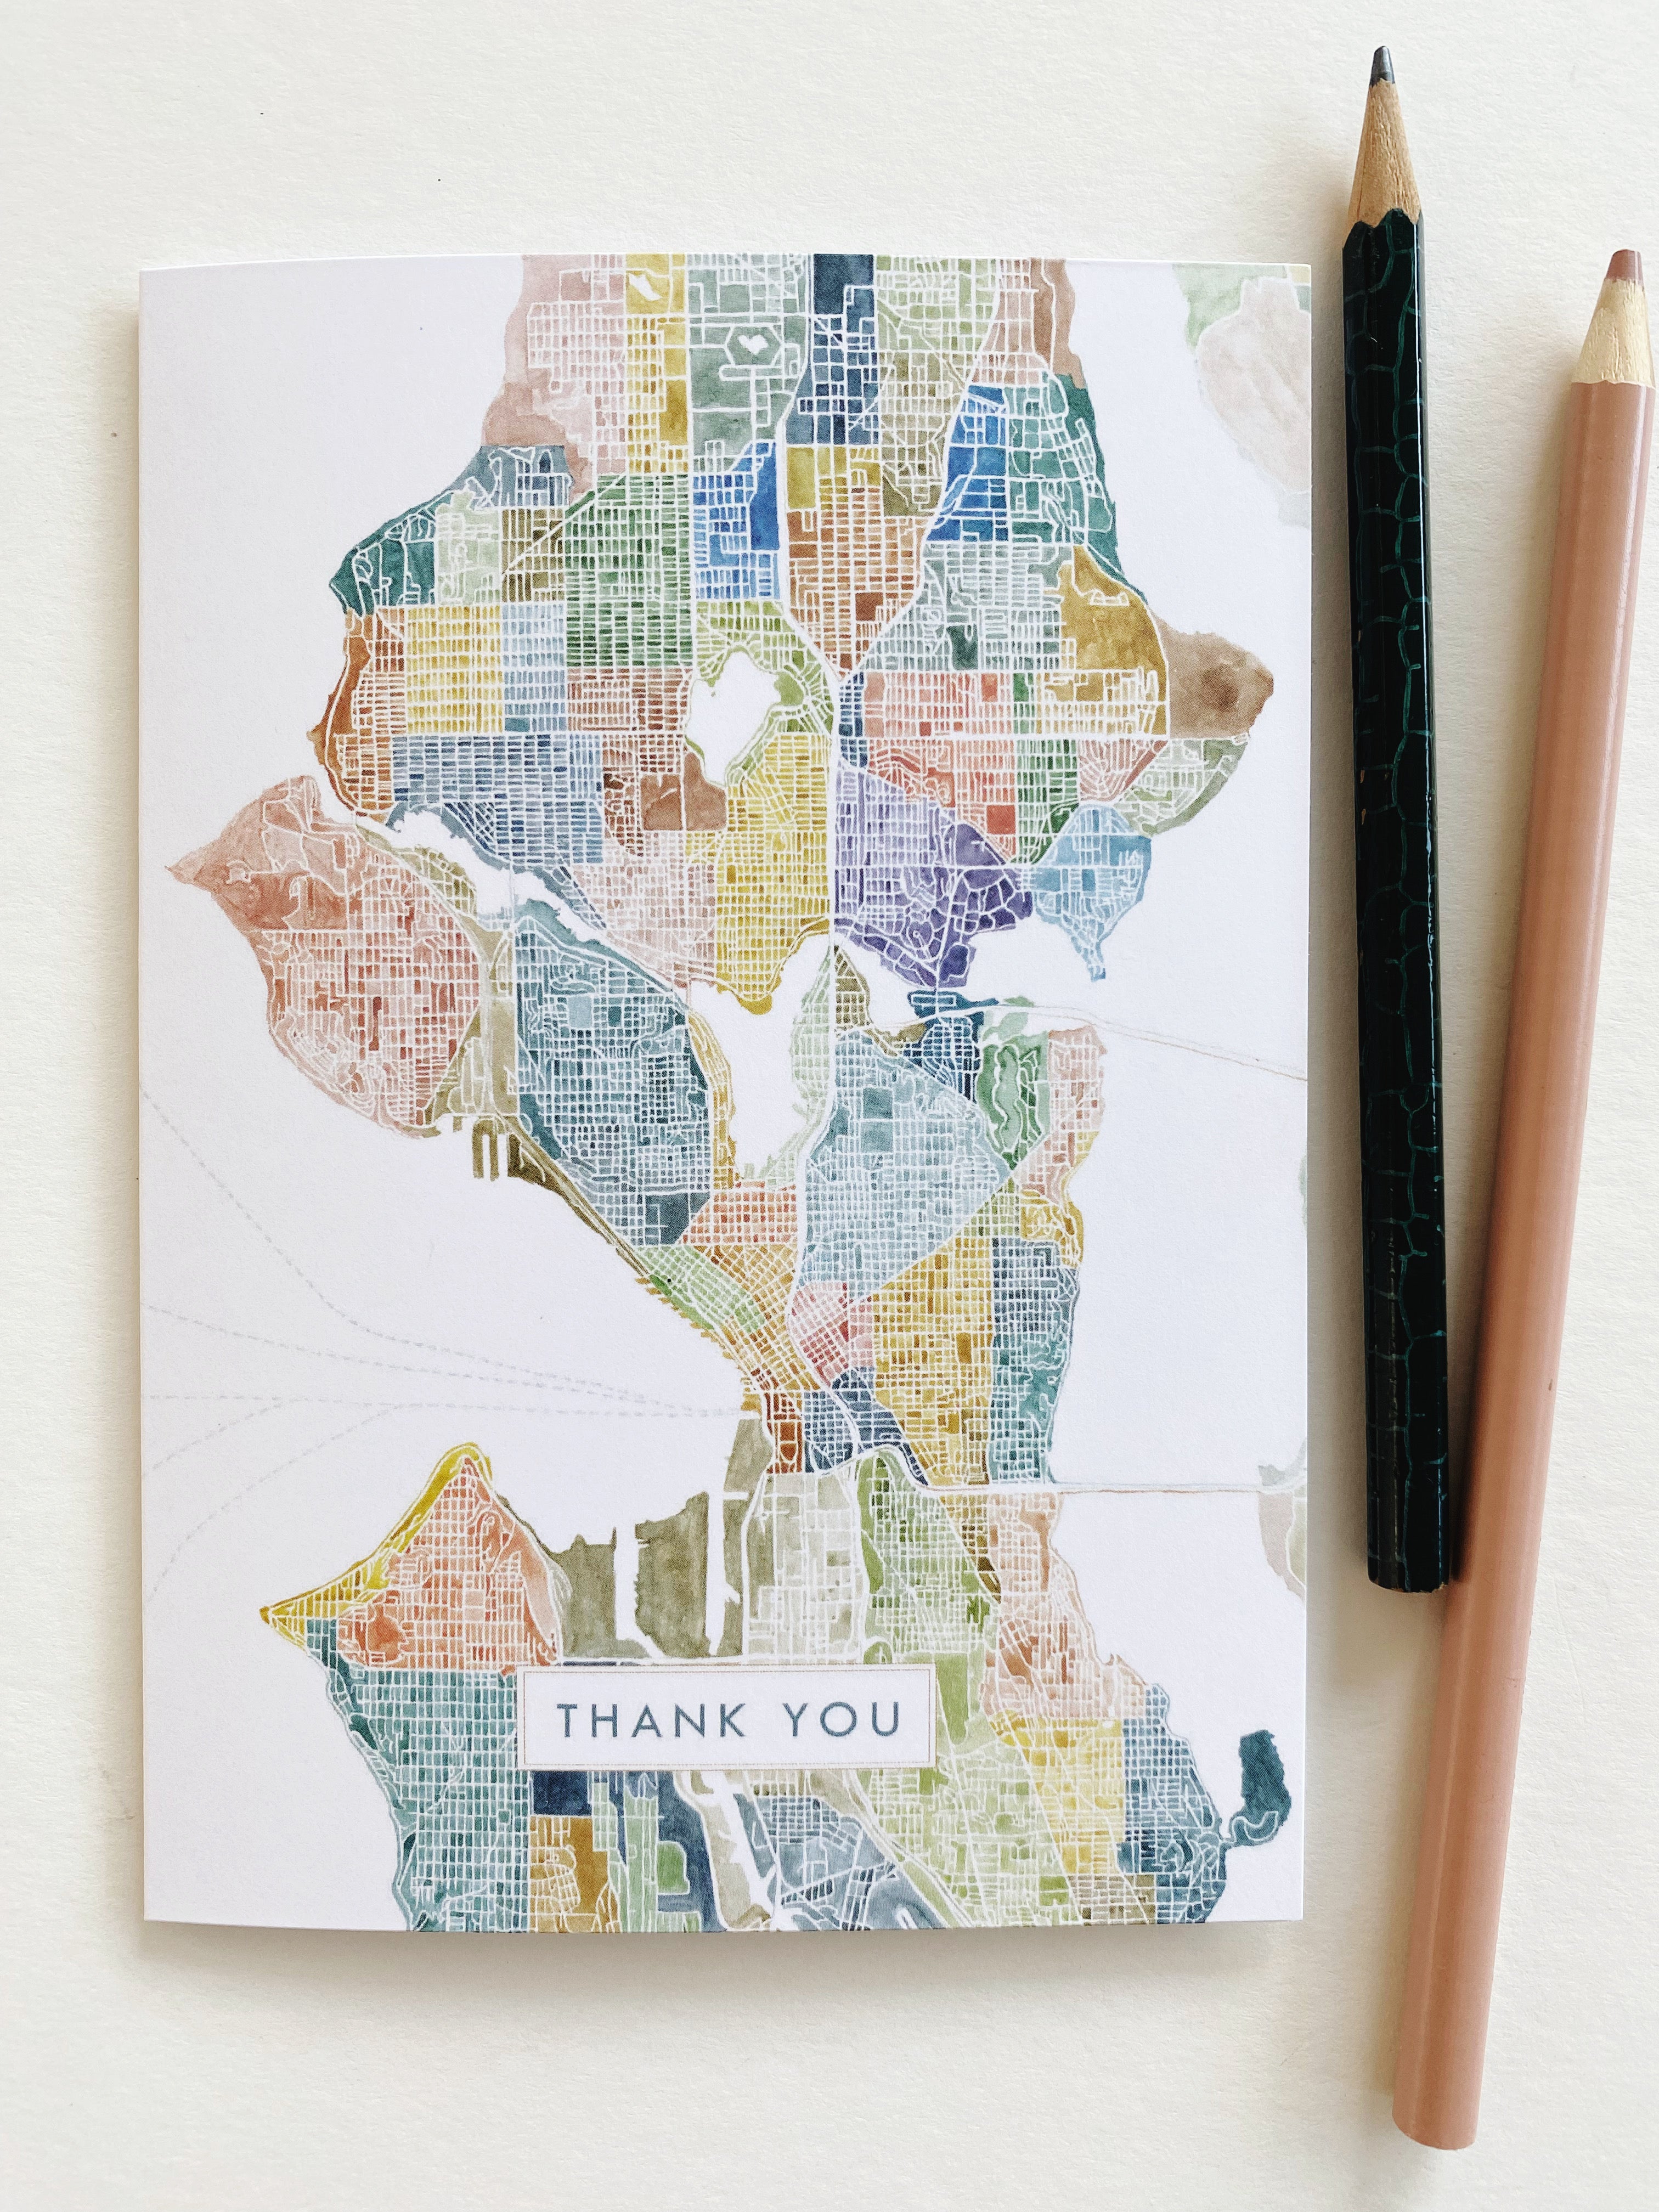 SEATTLE Neighborhoods Watercolor Map - thank you card